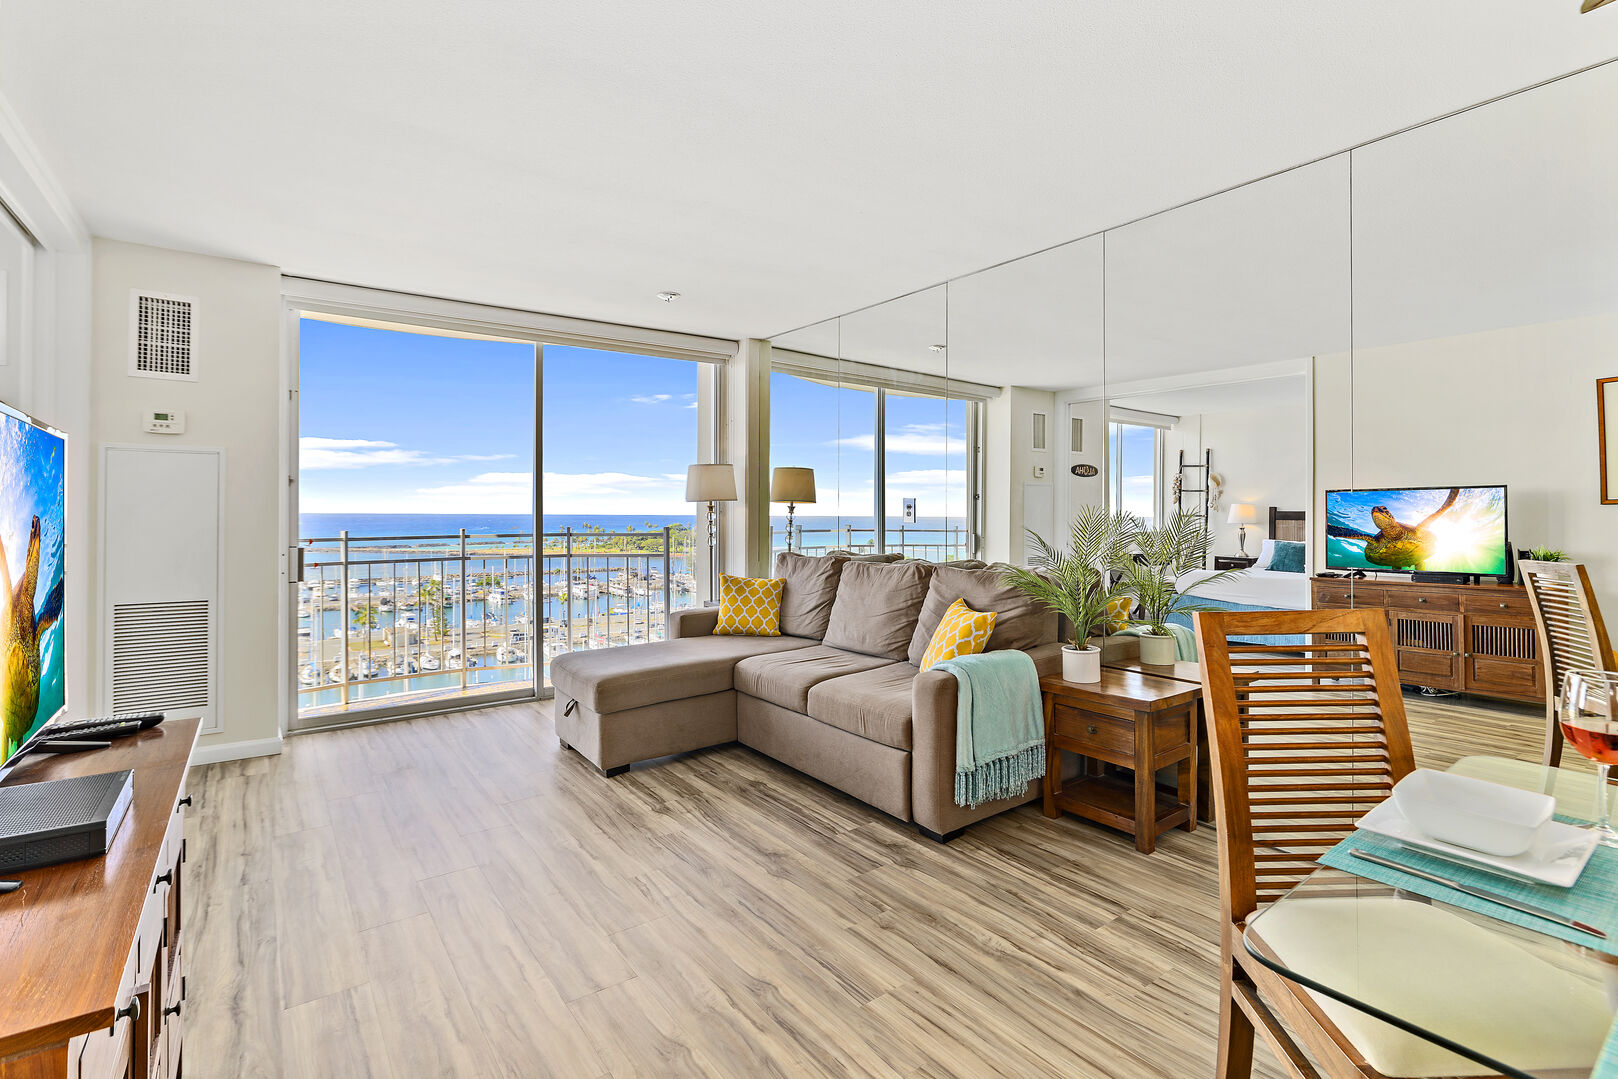 Beautiful renovated apartment with ocean views